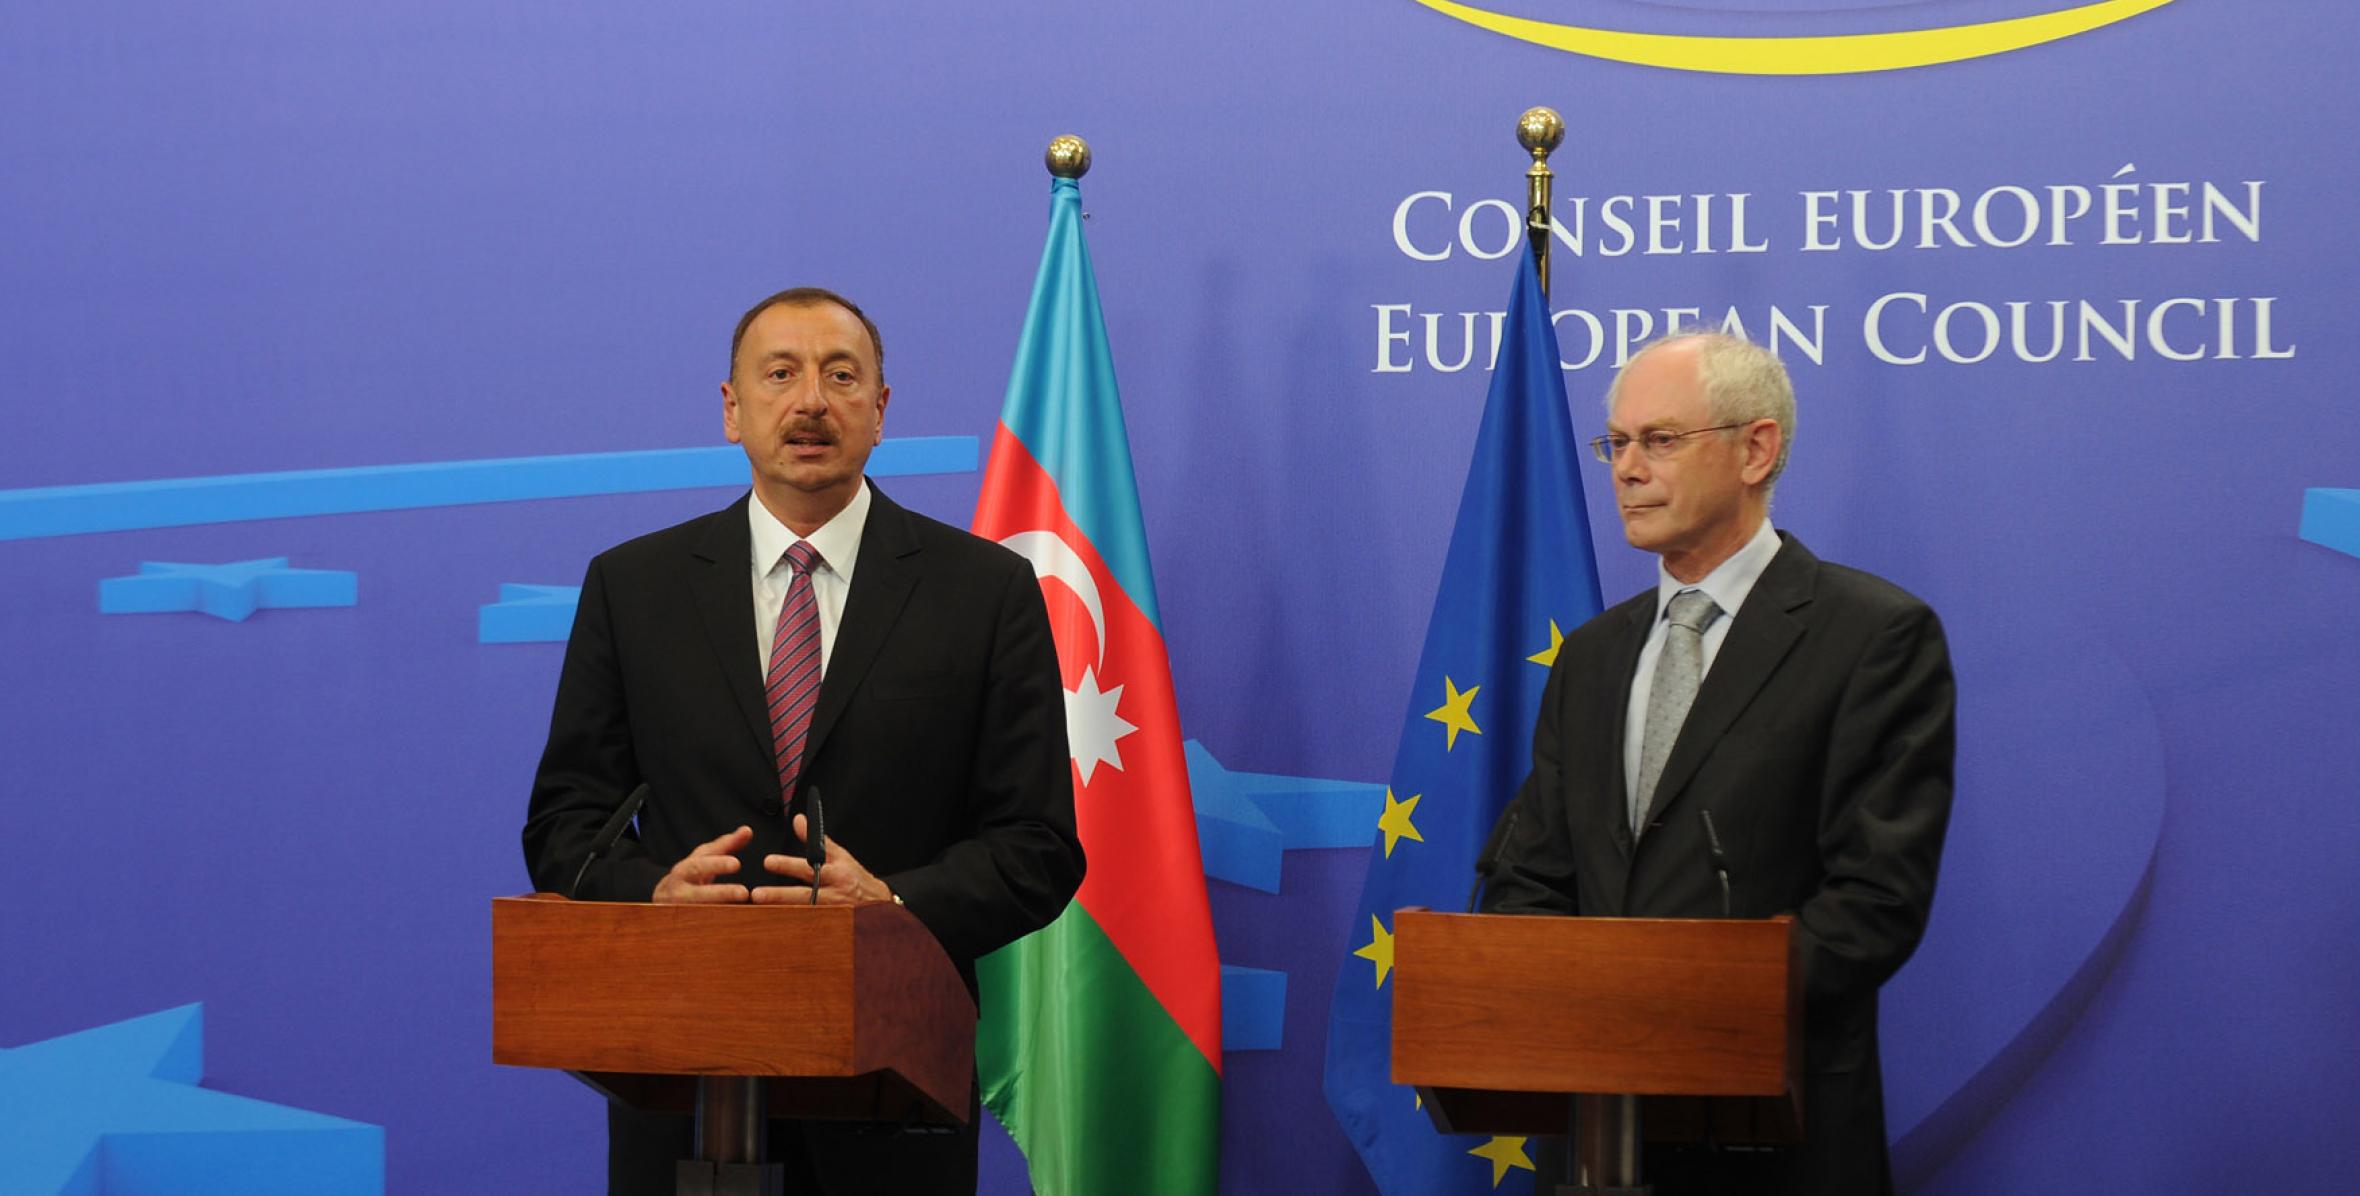 Ilham Aliyev and President of the European Union Herman Van Rompuy made press statements